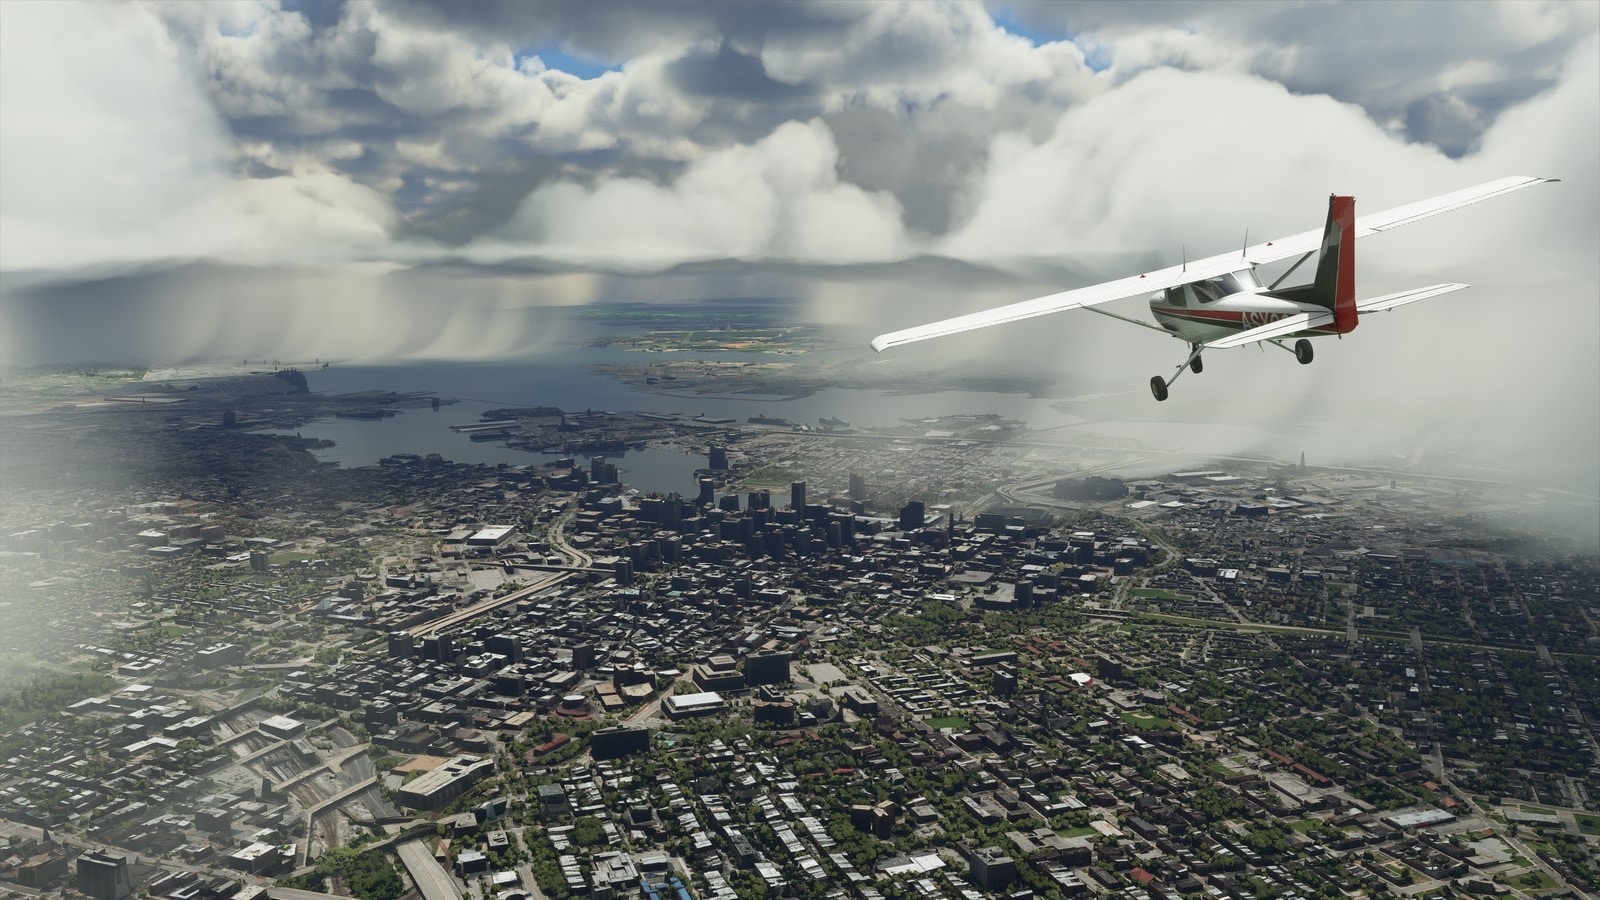 How Microsoft Flight Simulator 2020 Multiplayer Works - VR Flight World